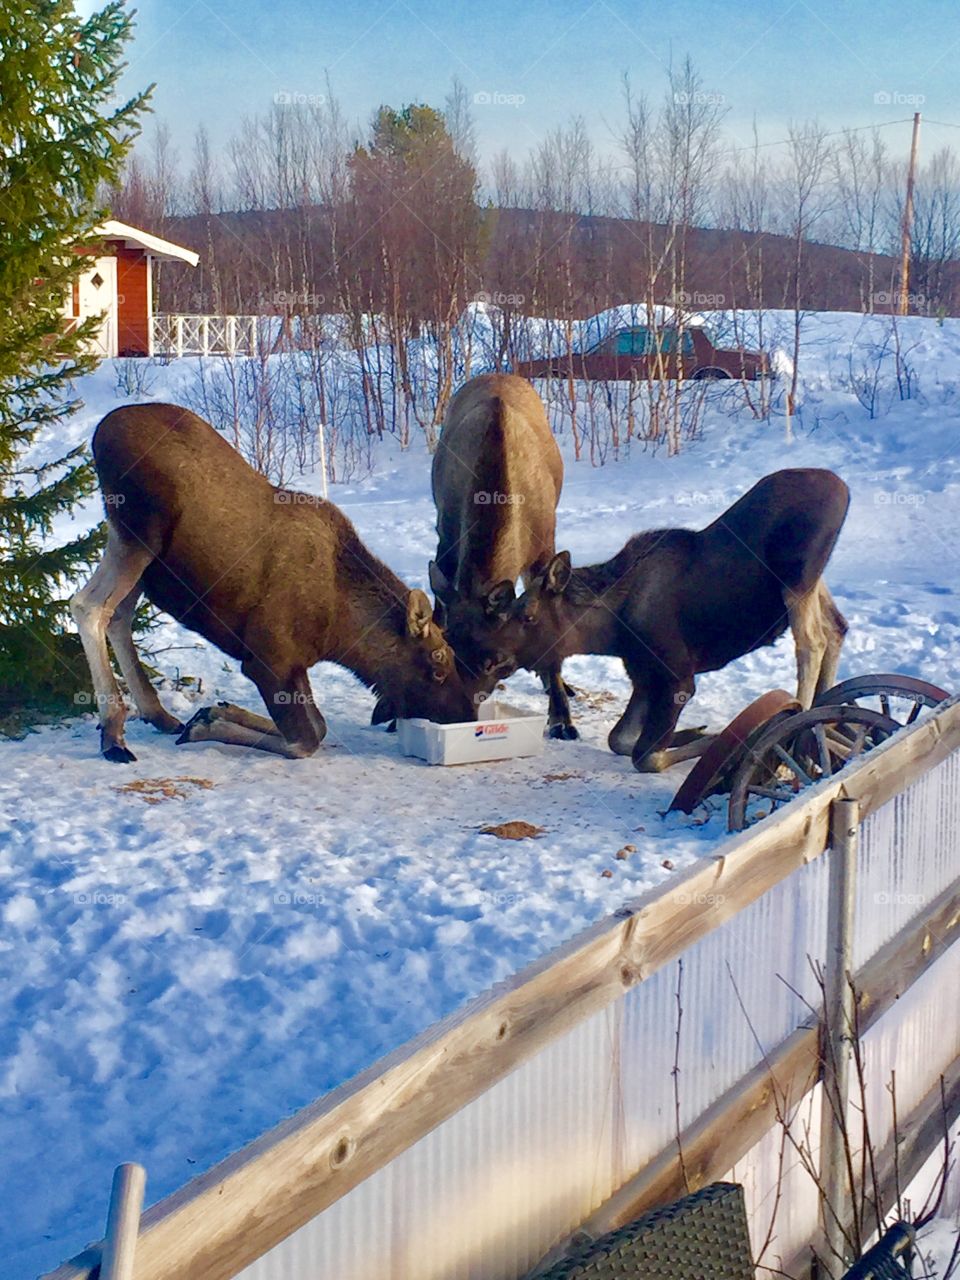 Jänkänalusta, sweden, kiruna kommun
Moose are eating